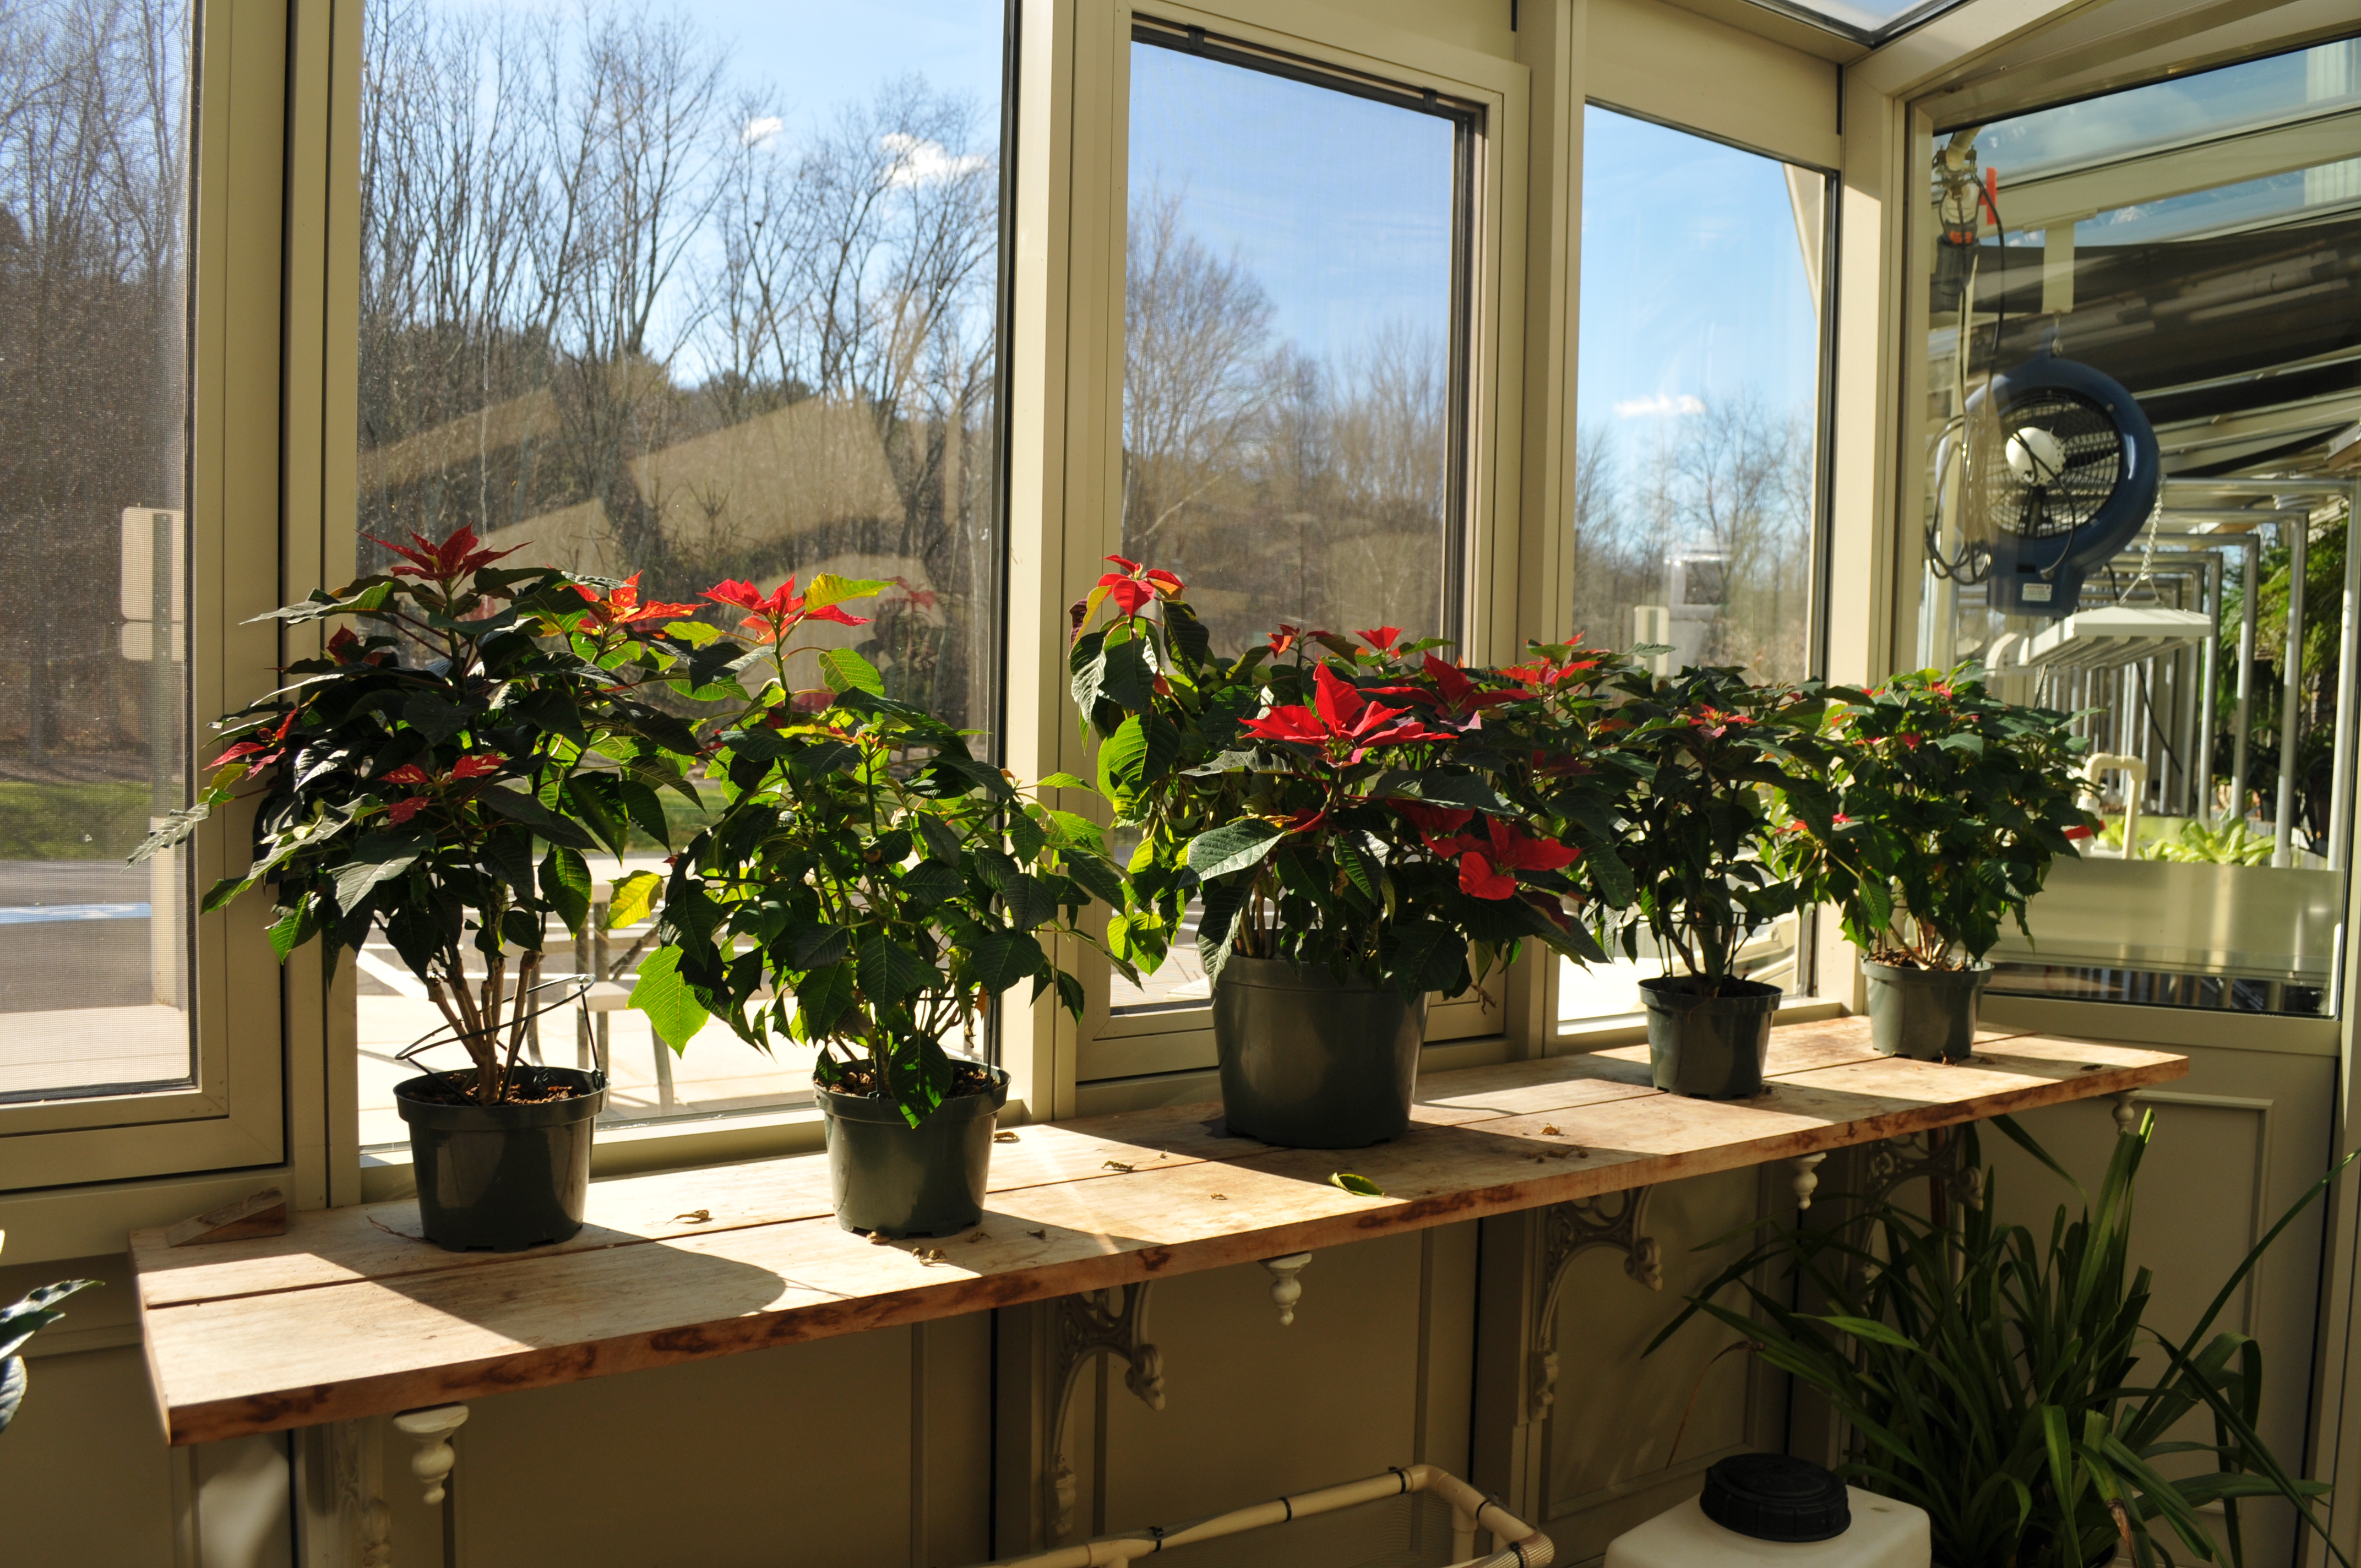 Greenhouse winter plants and lighting